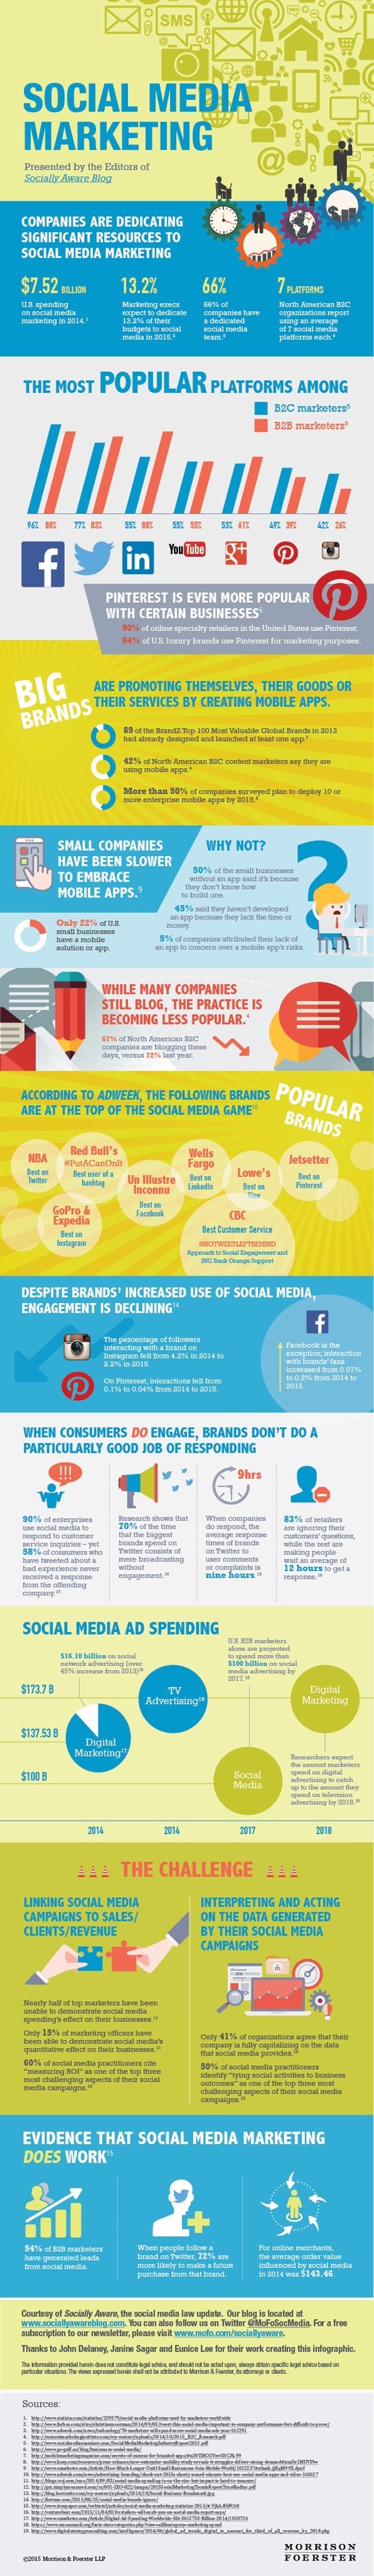 social-media-marketing-infographic